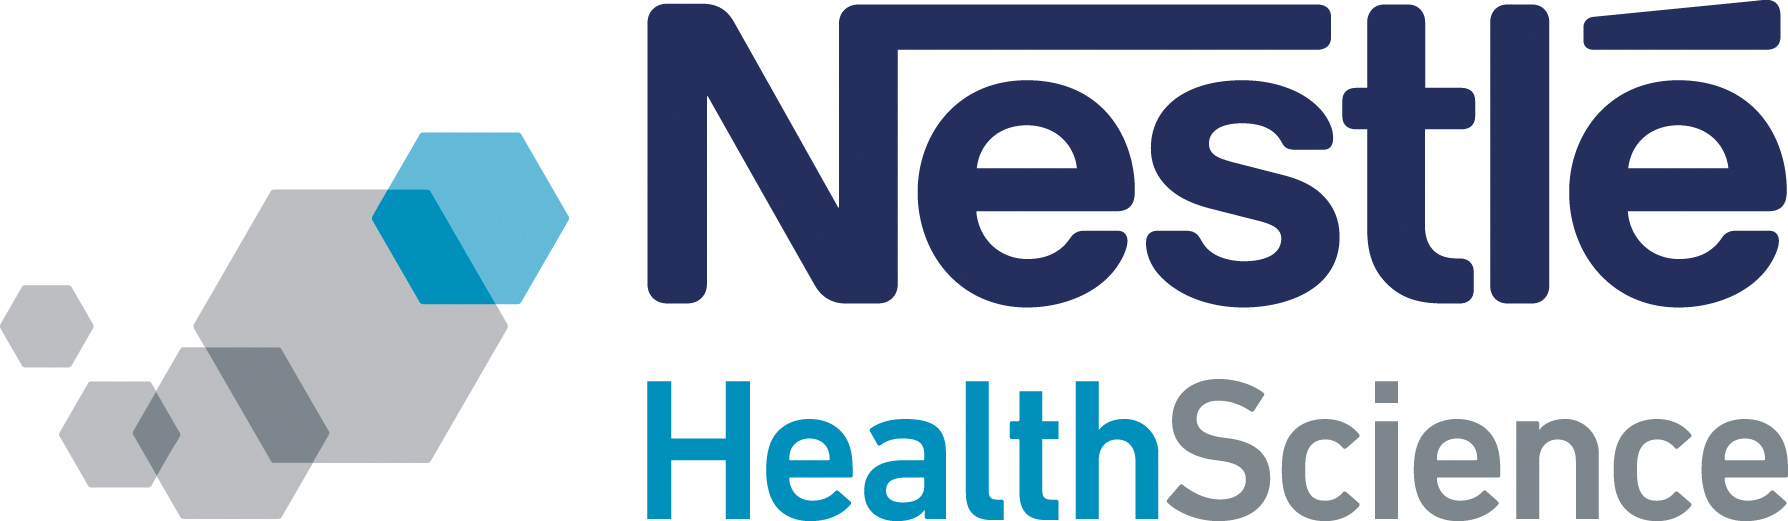 Nestle Health Science 2017